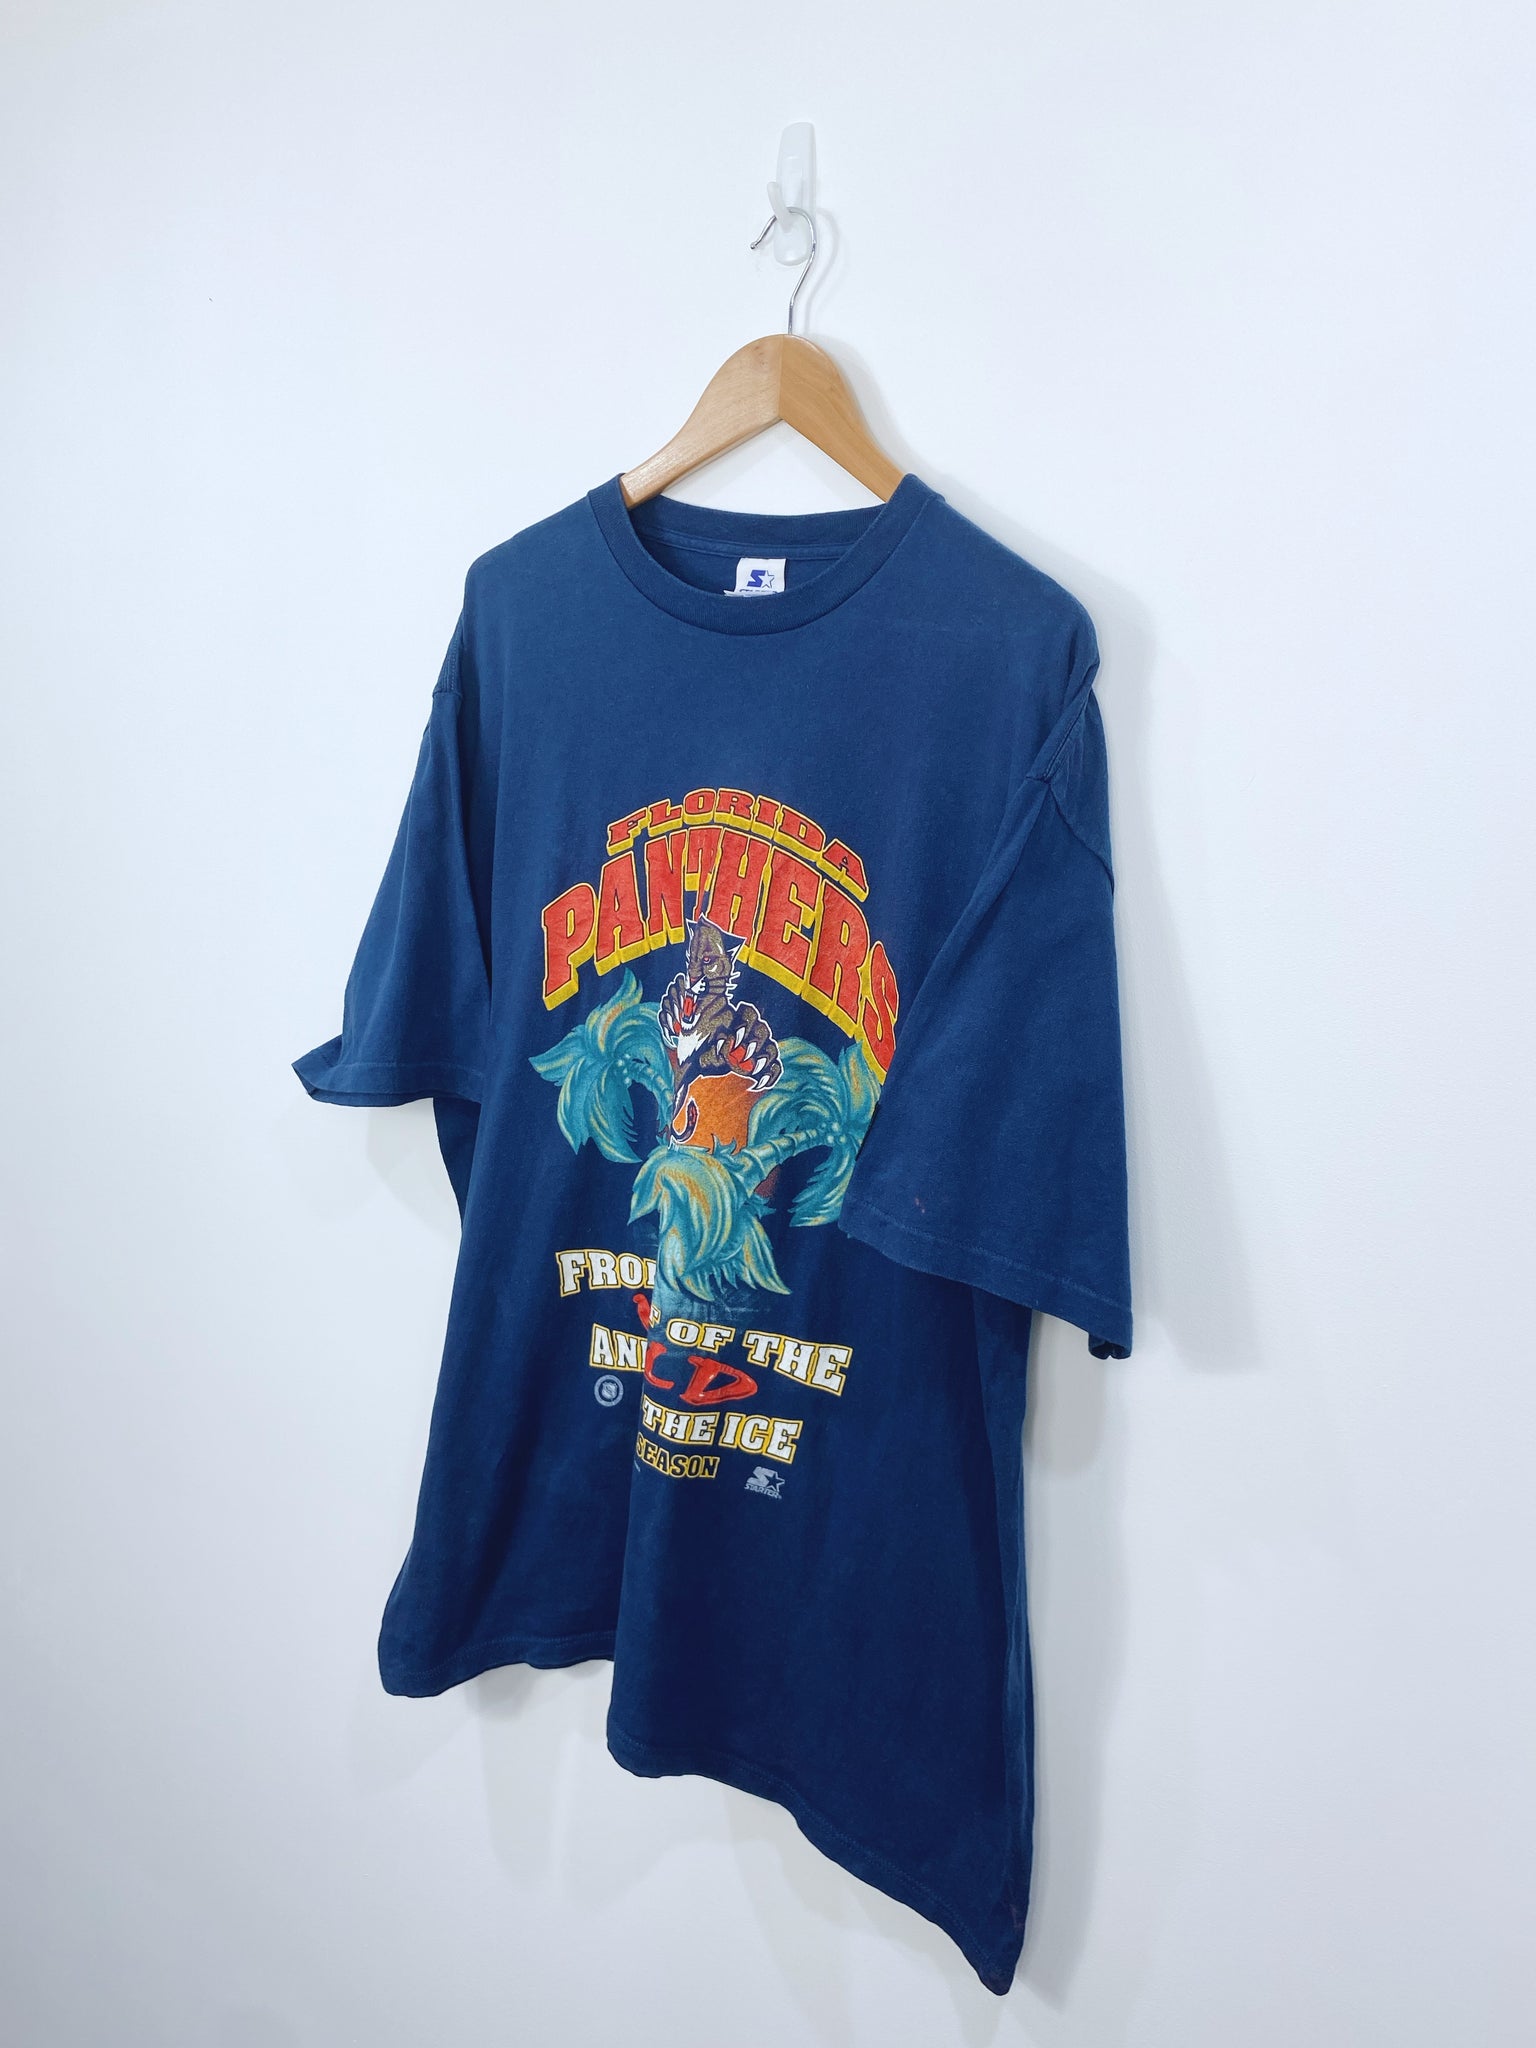 Vintage 1993 Florida Panthers T-shirt XL